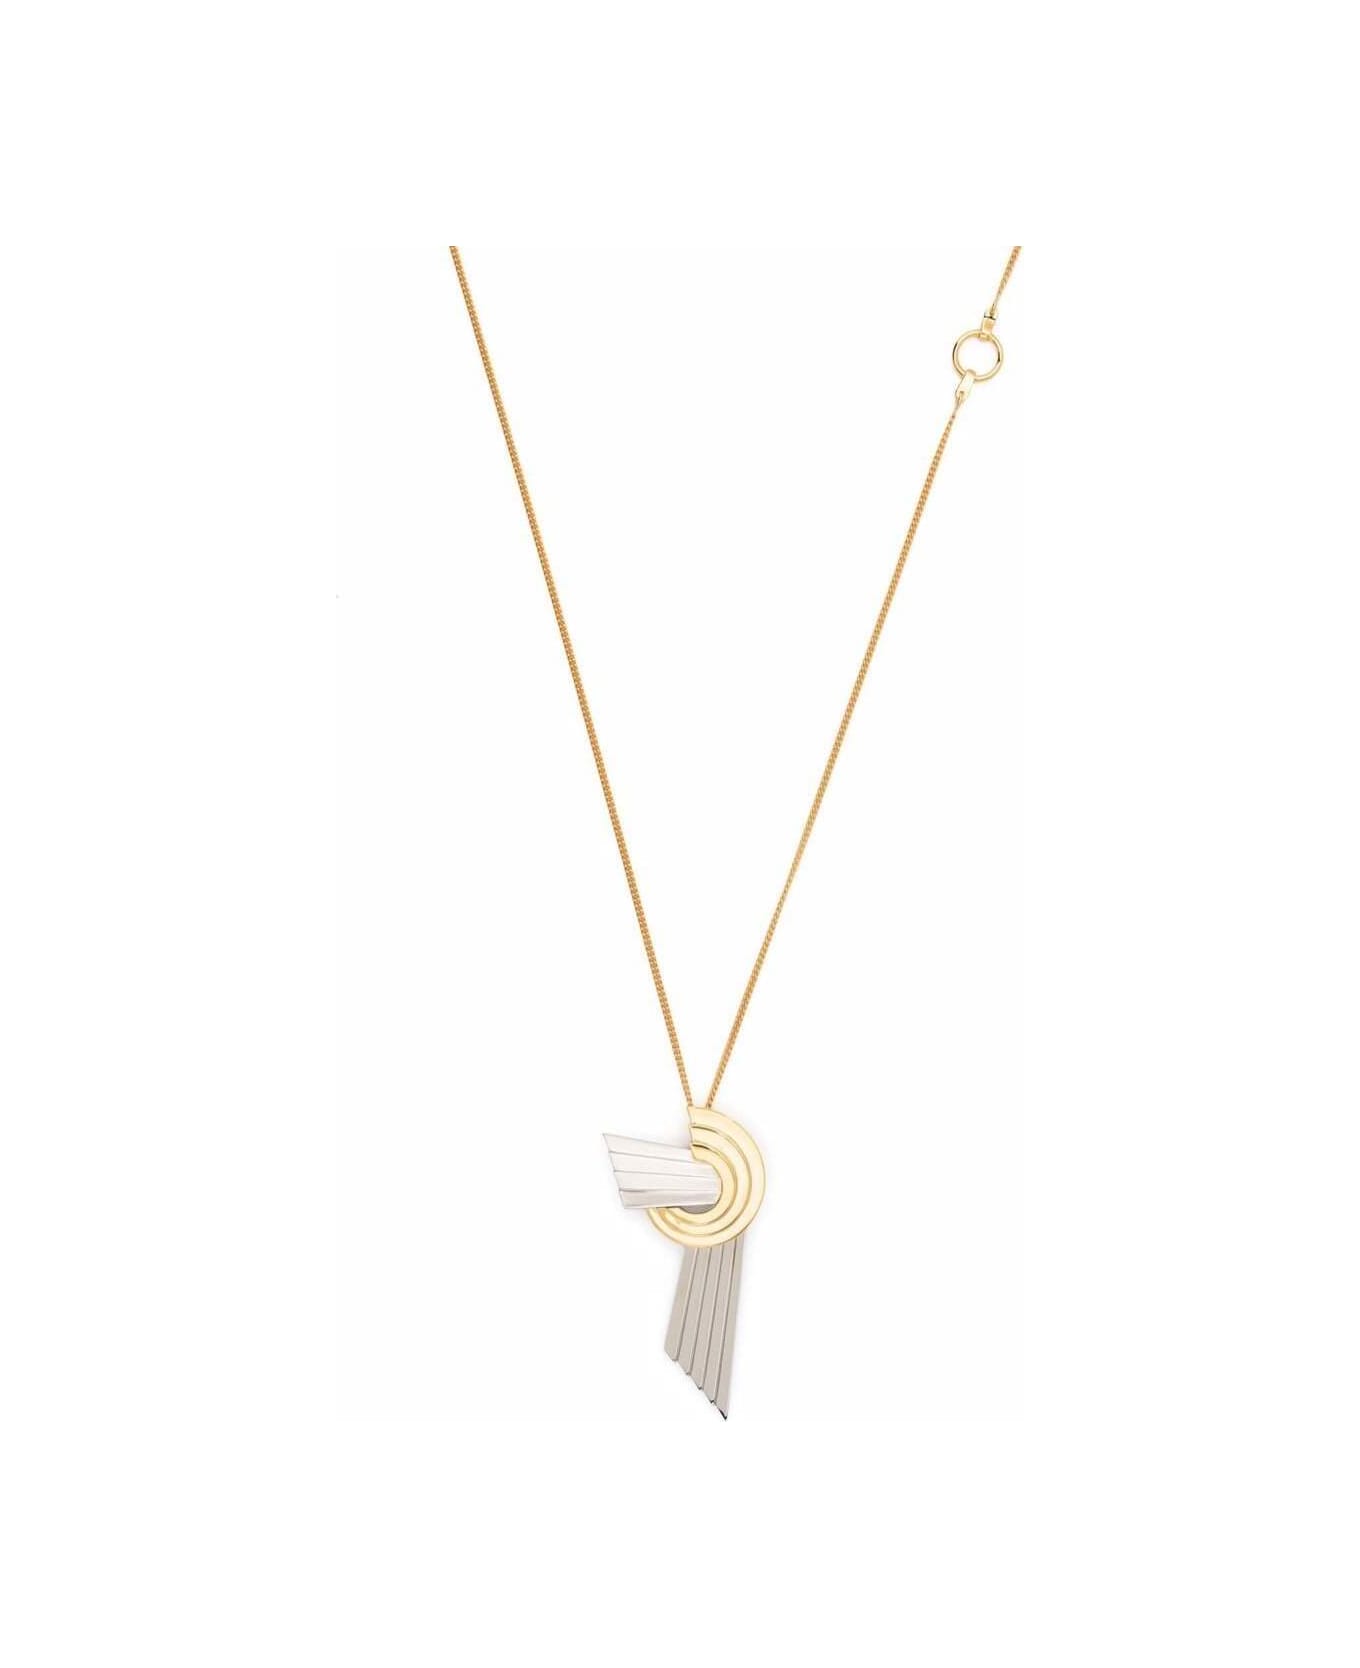 Leda Madera Meryl Brass Necklace With Pendant Detail - Metallic